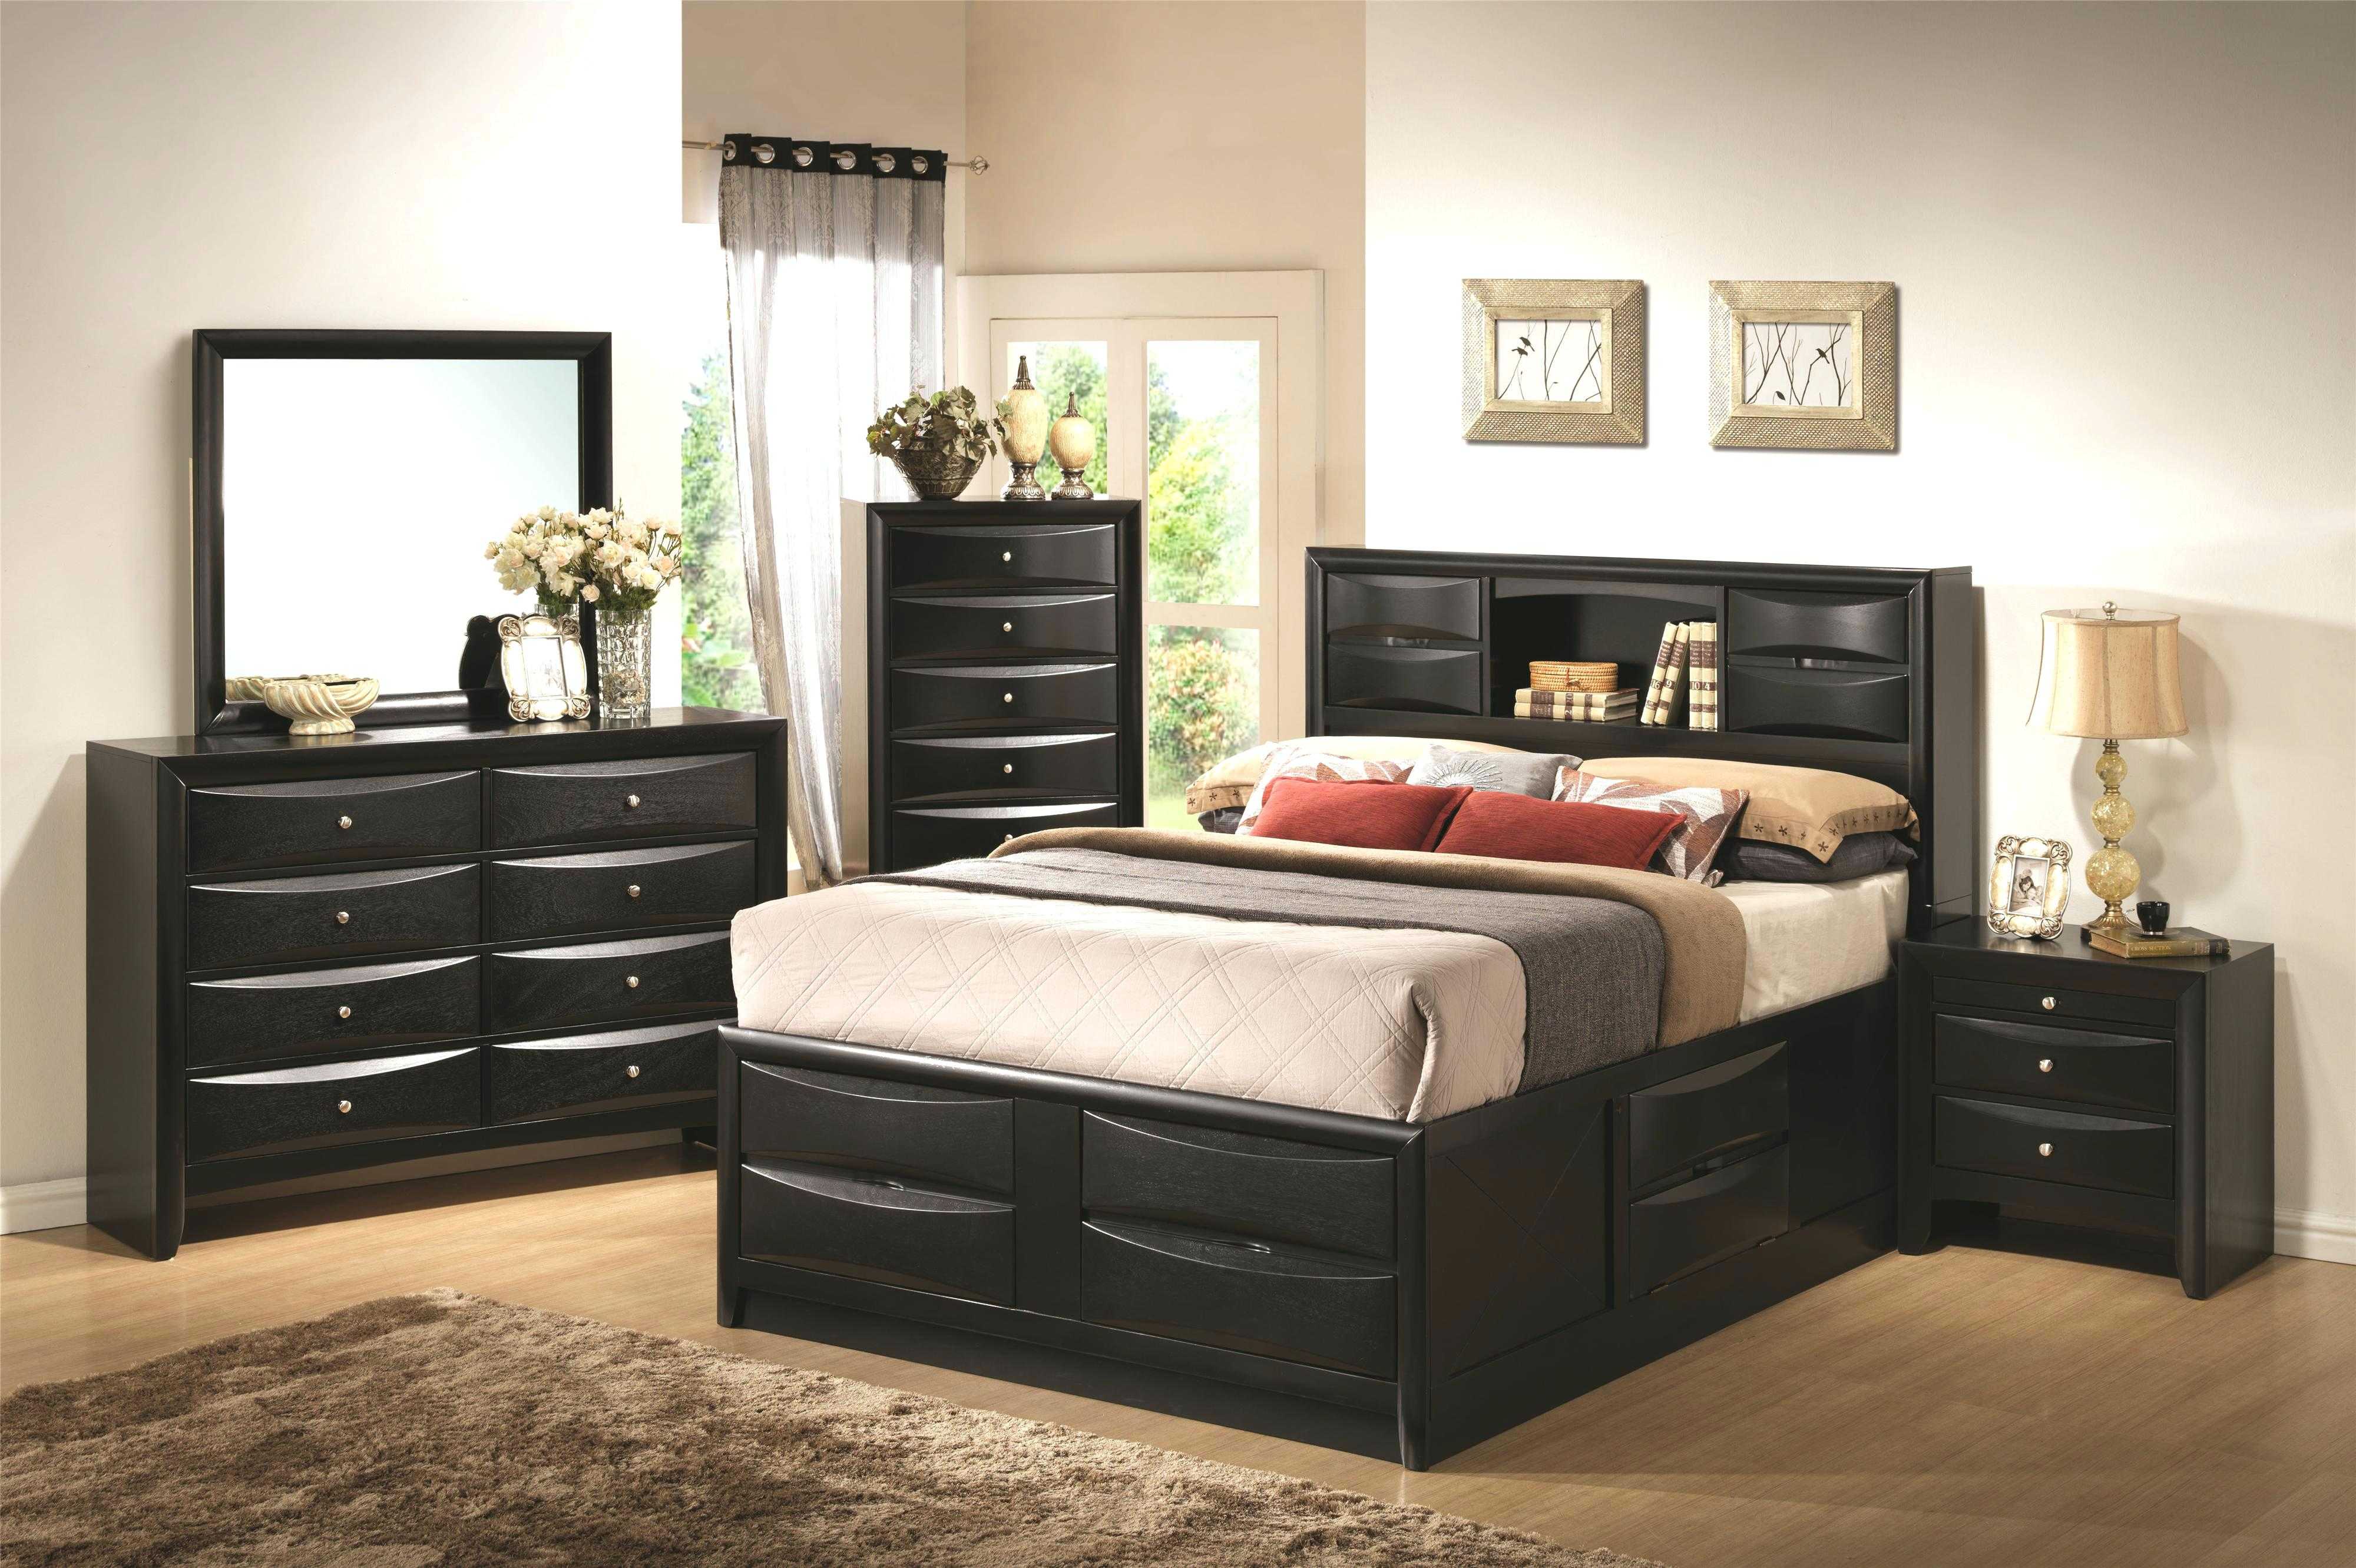 king headboard with built in nightstands outstanding platform bed with built in nightstands trends and king MVKSNXE